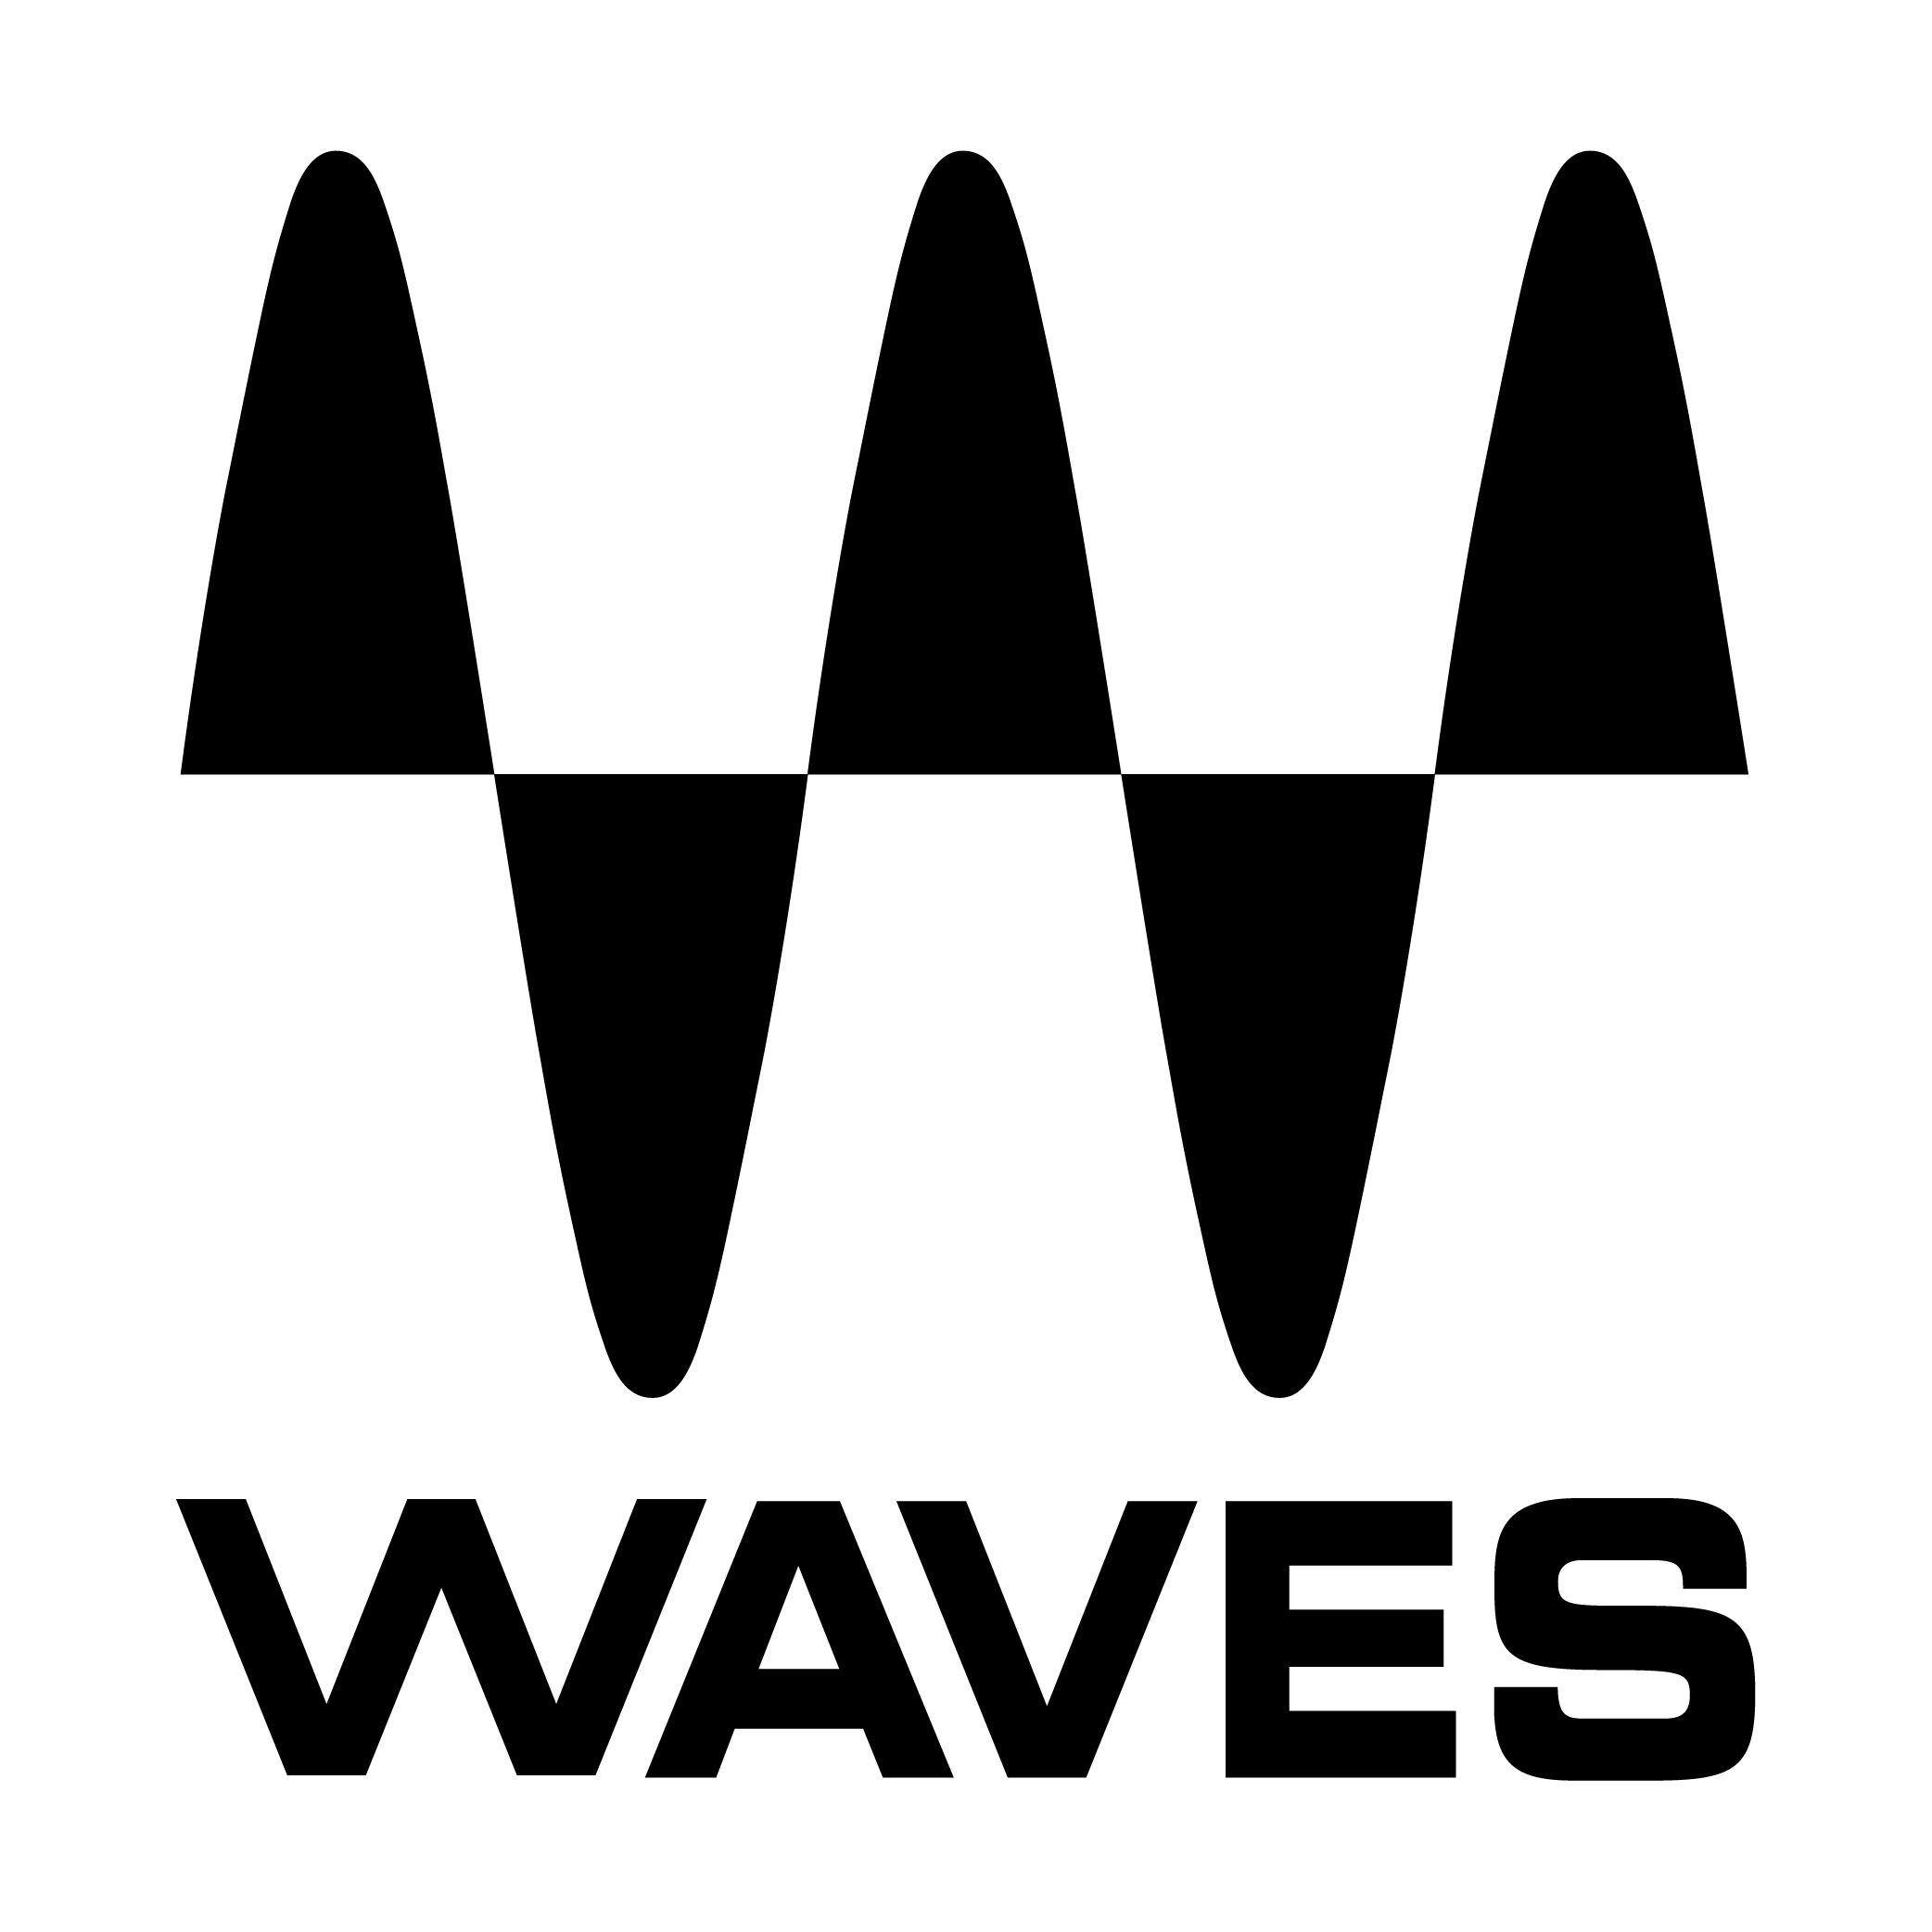 Black and White Waves Logo - Waves Logo